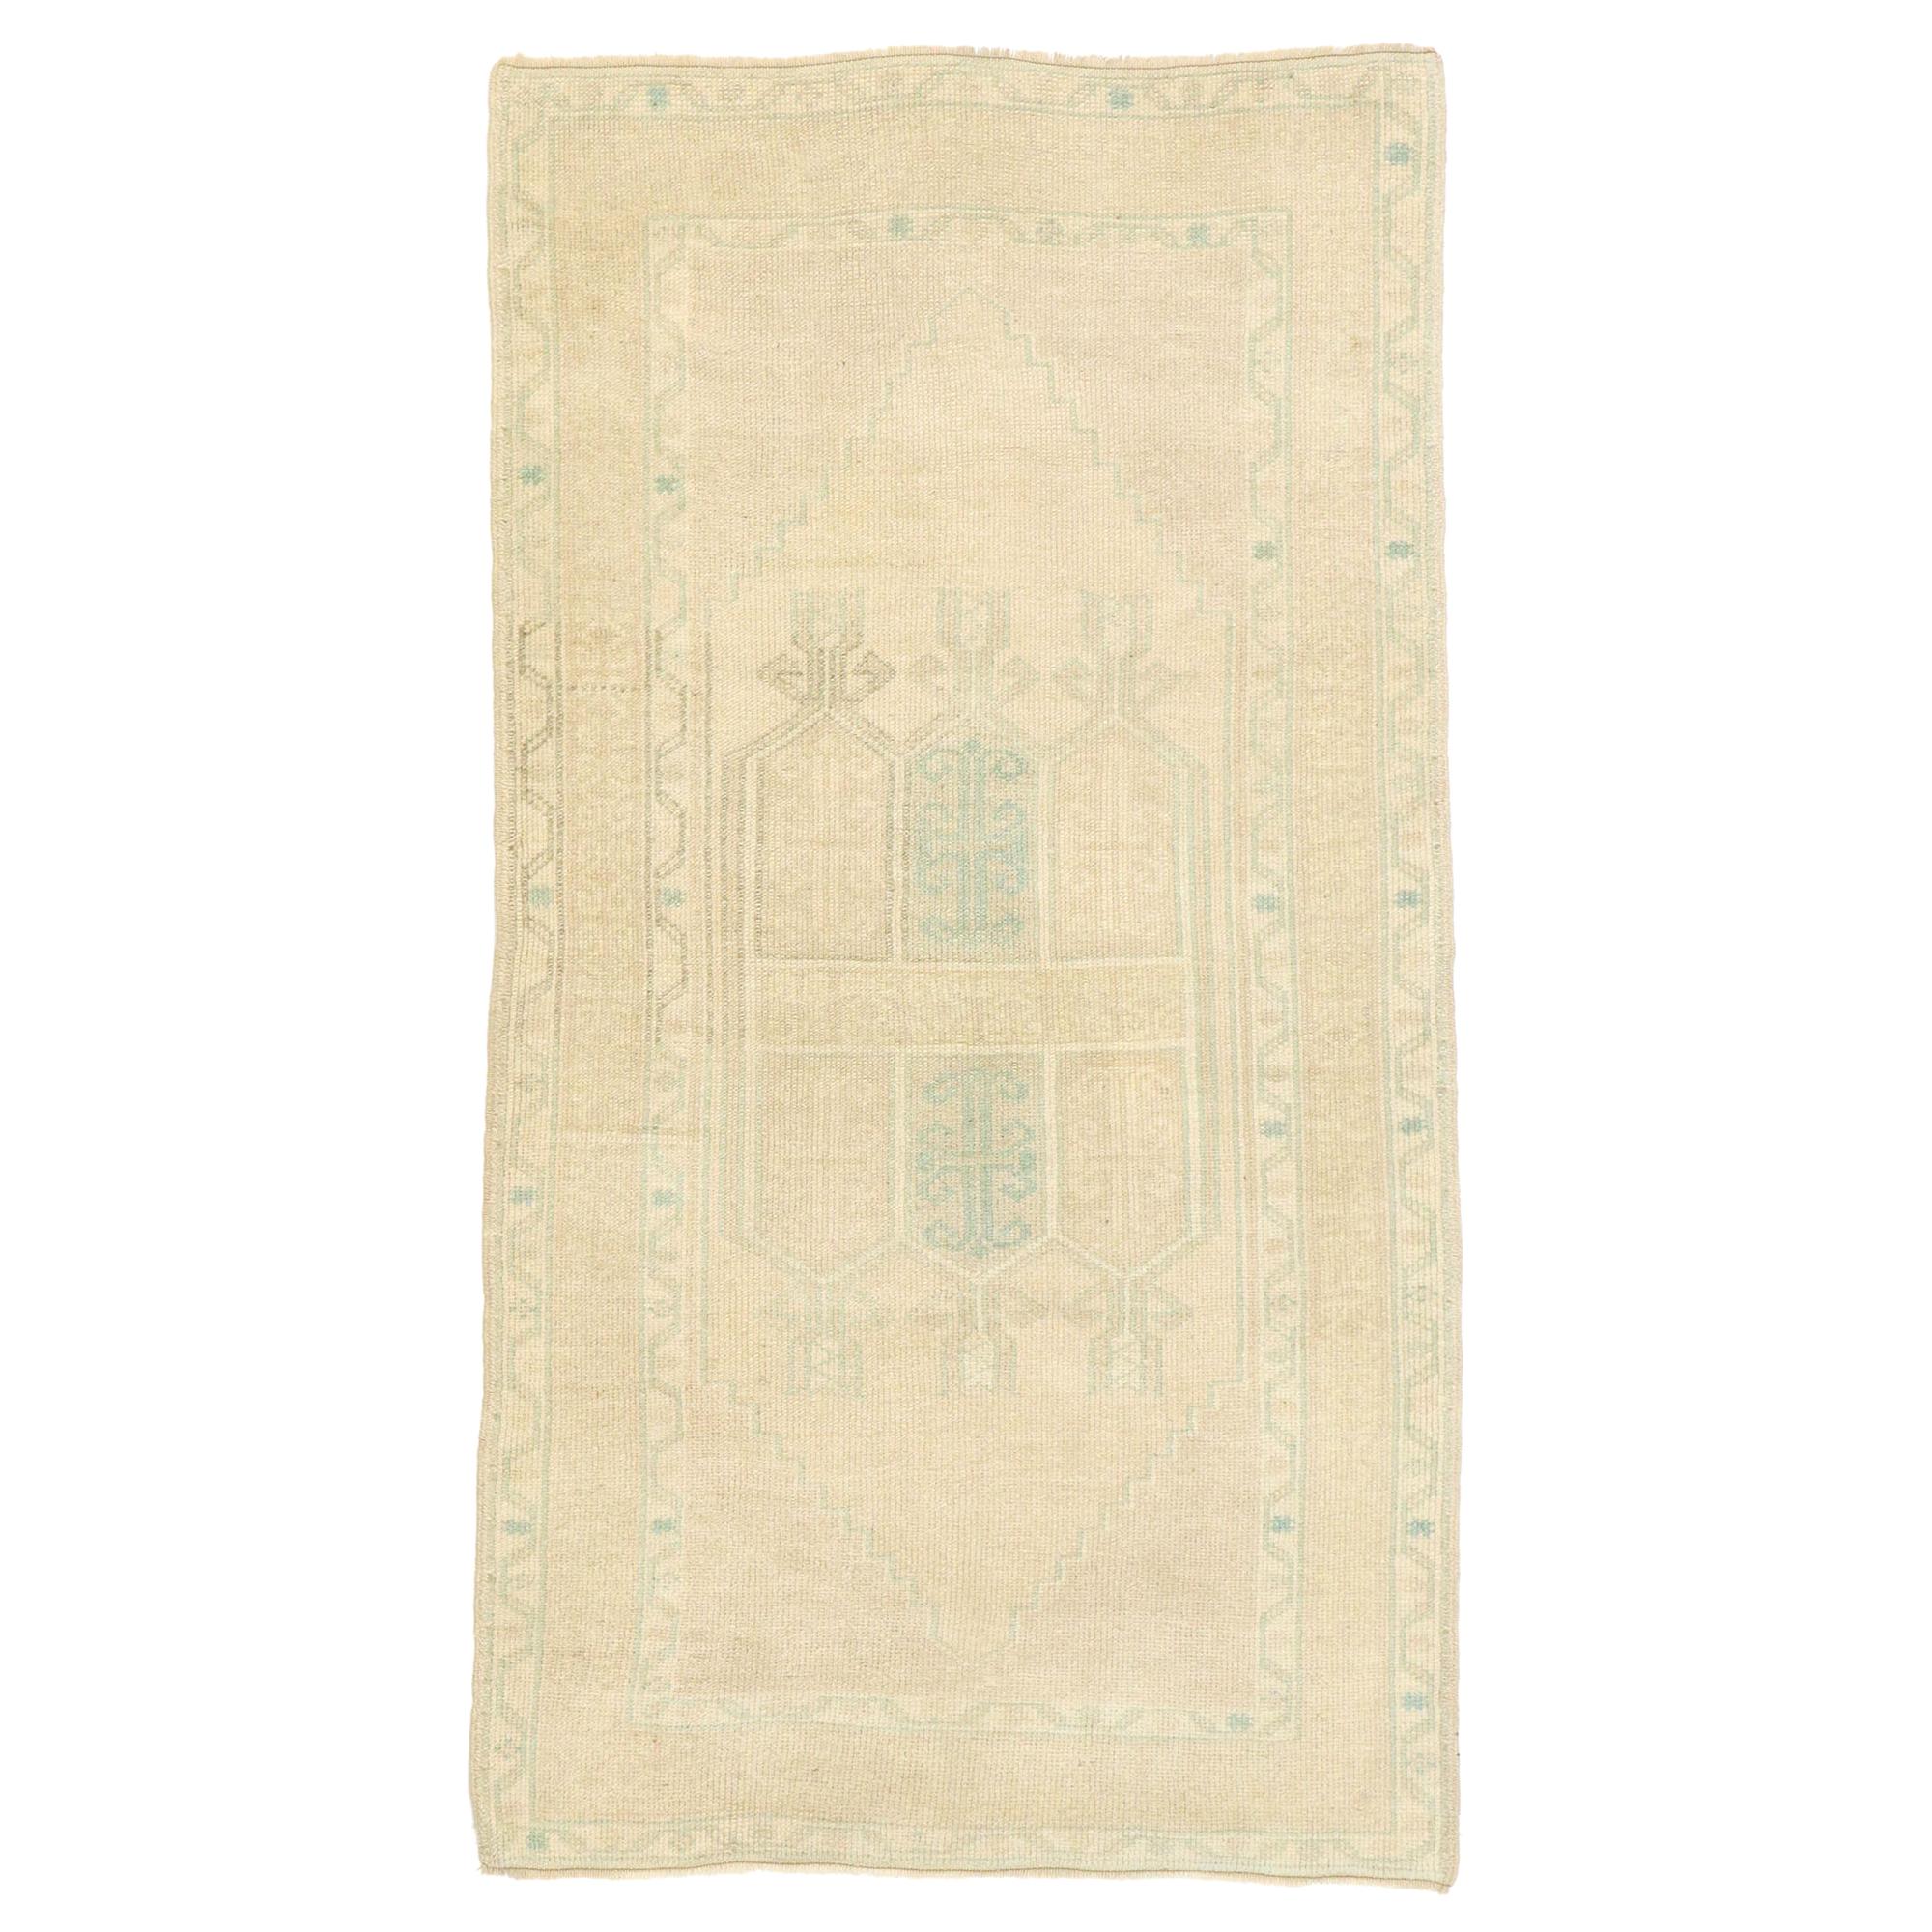 Vintage Turkish Prayer Rug, Anatolian Double Mihrab Carpet For Sale